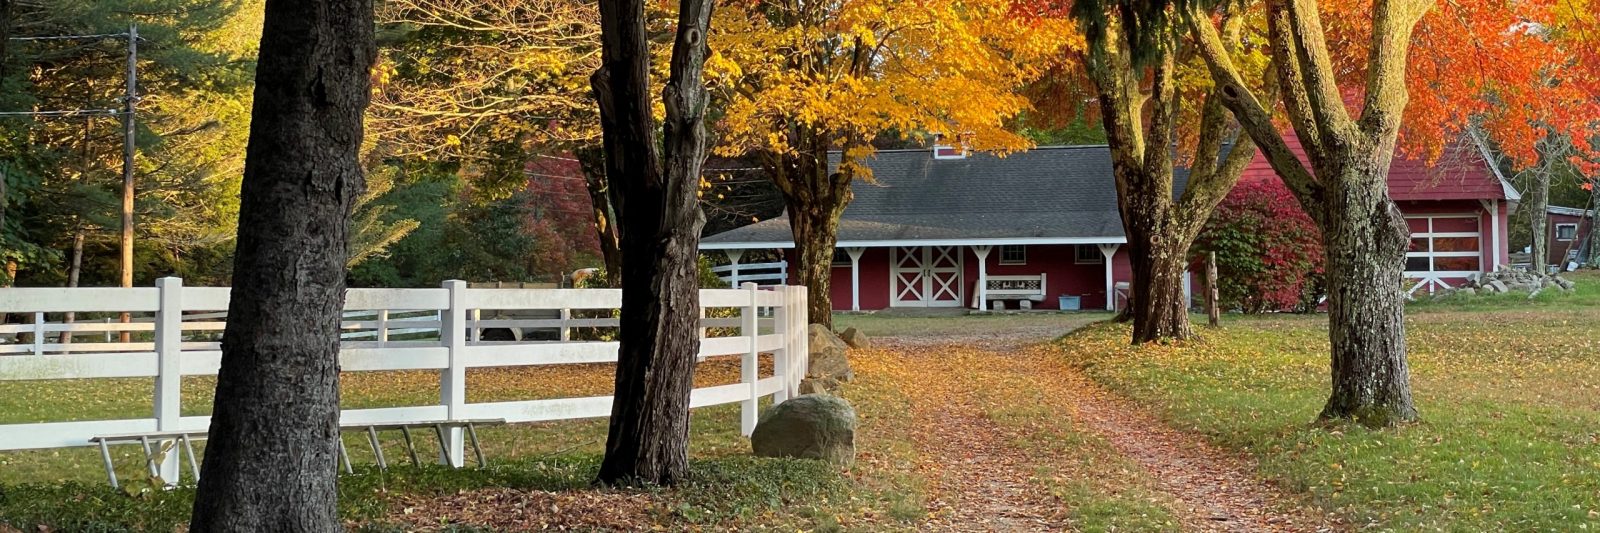 Fall New England Scene with Barn